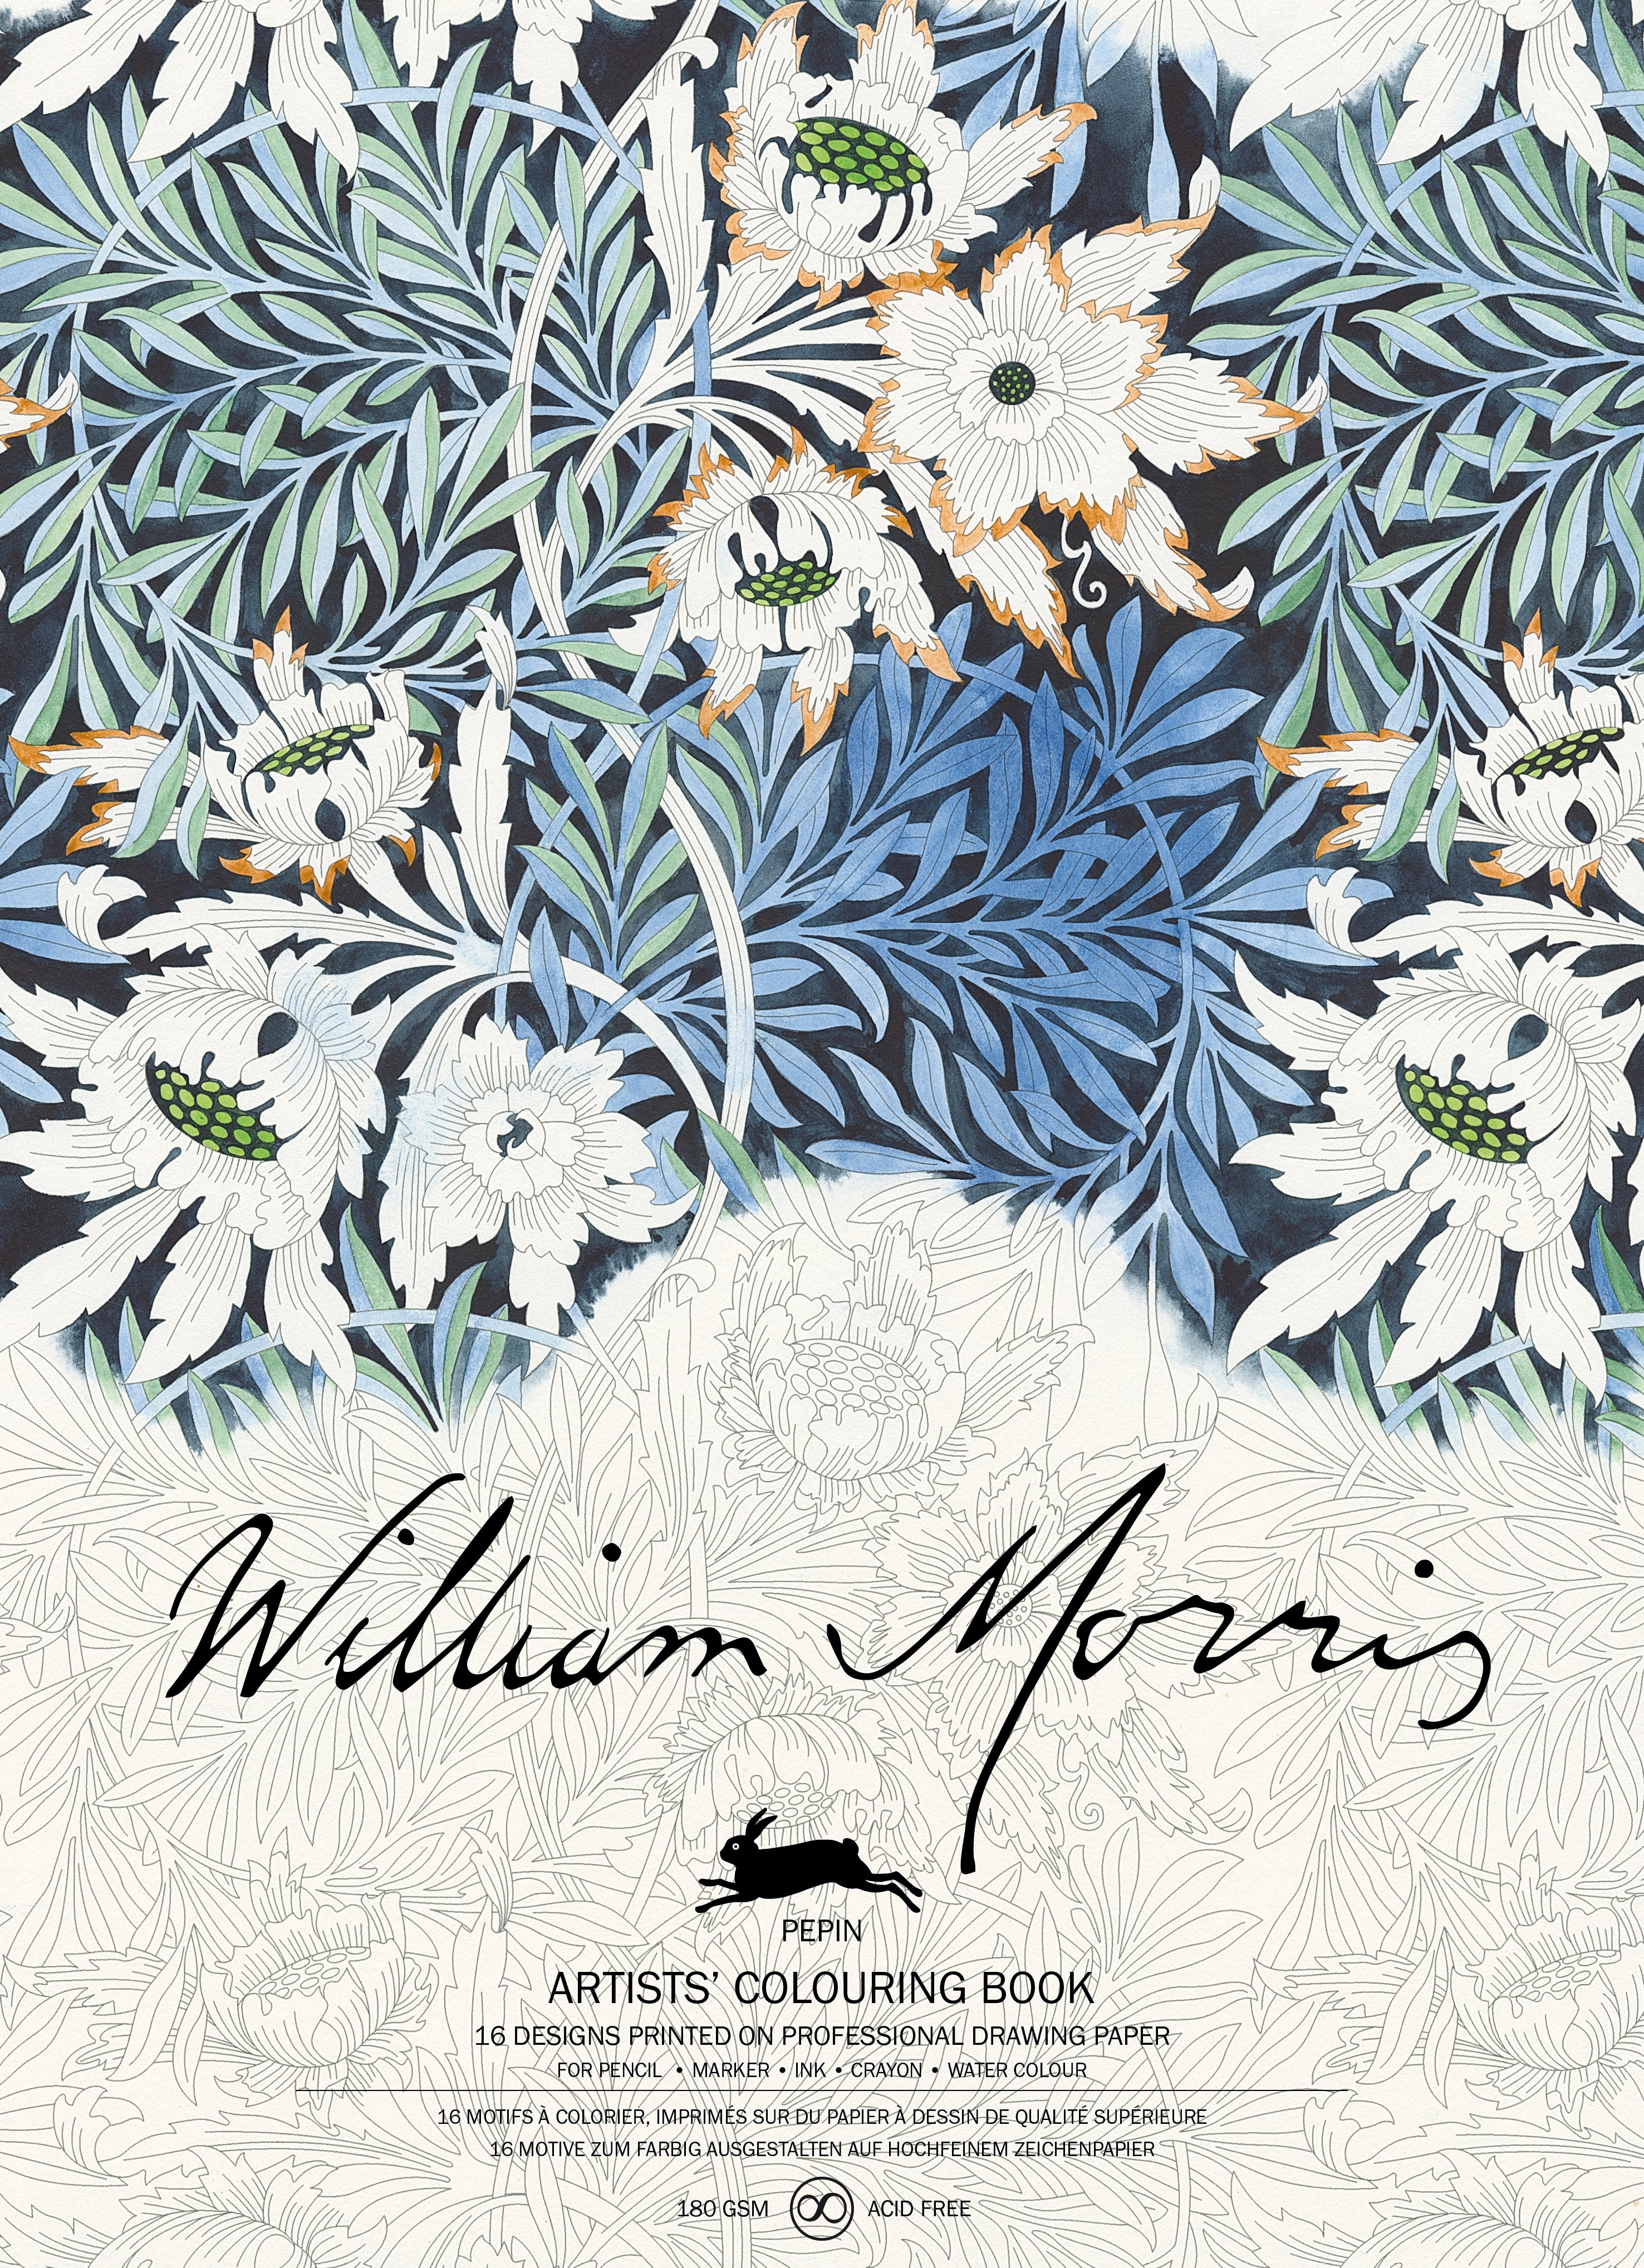 Artists' Coloring Book - William Morris